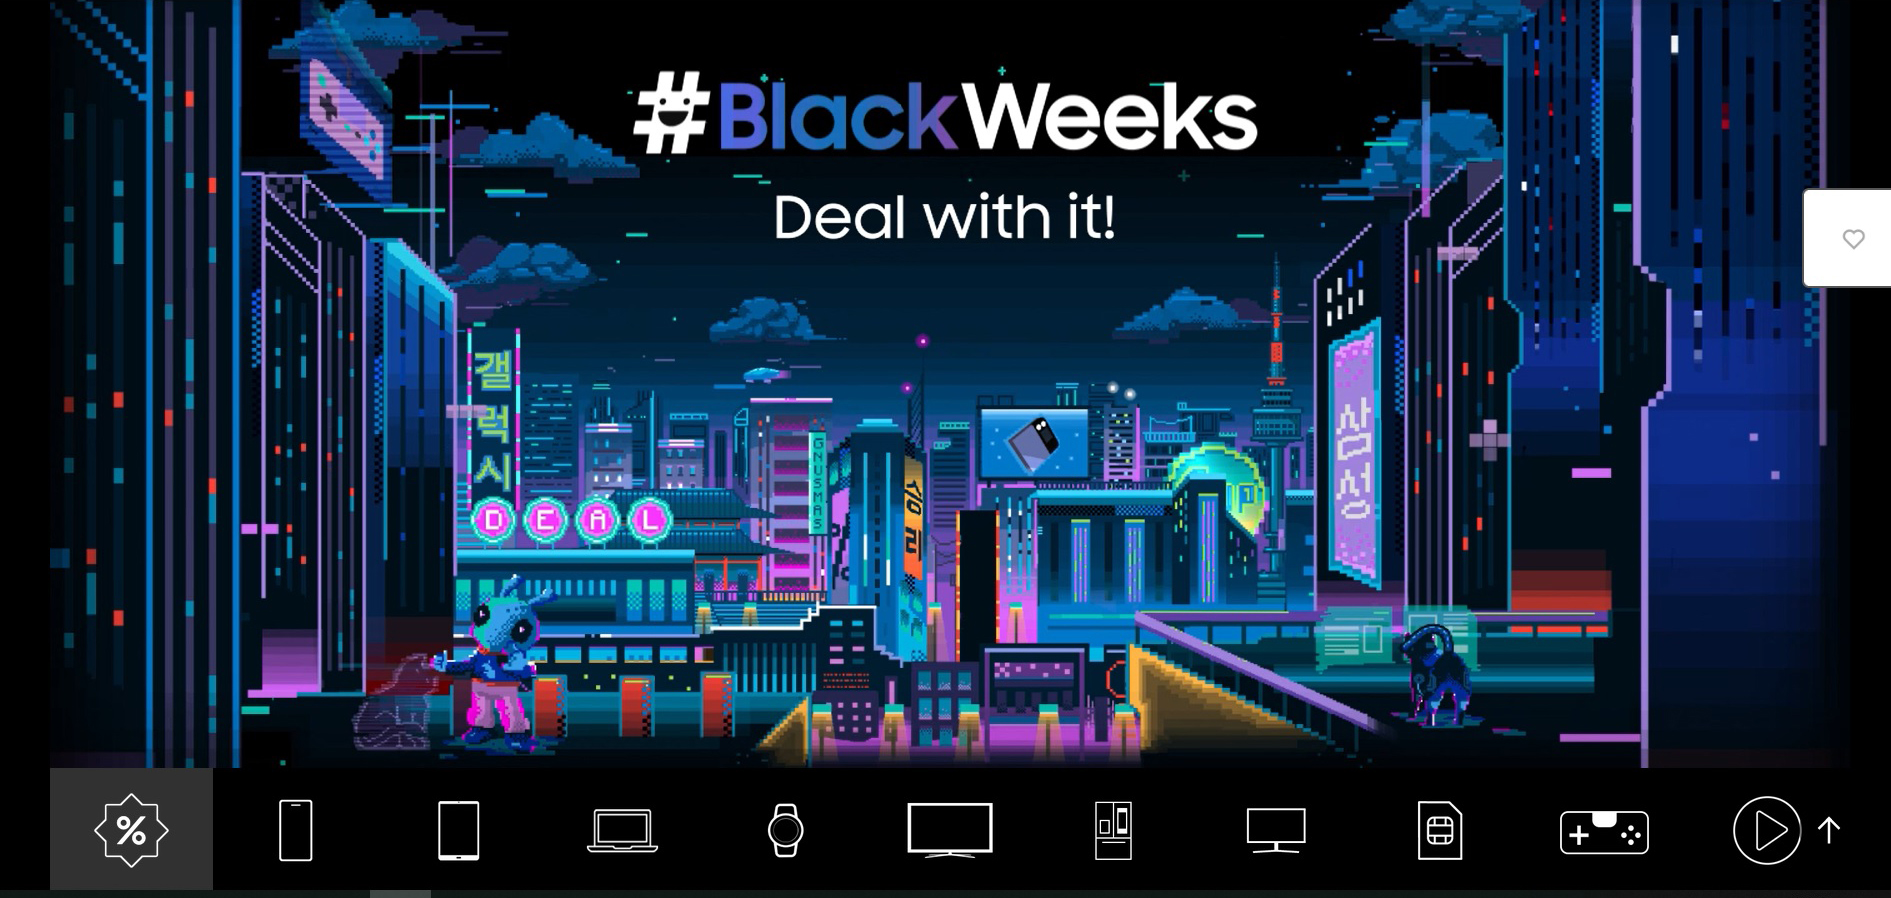 Cyberpunk-City mit Samsung #BlackWeeks.